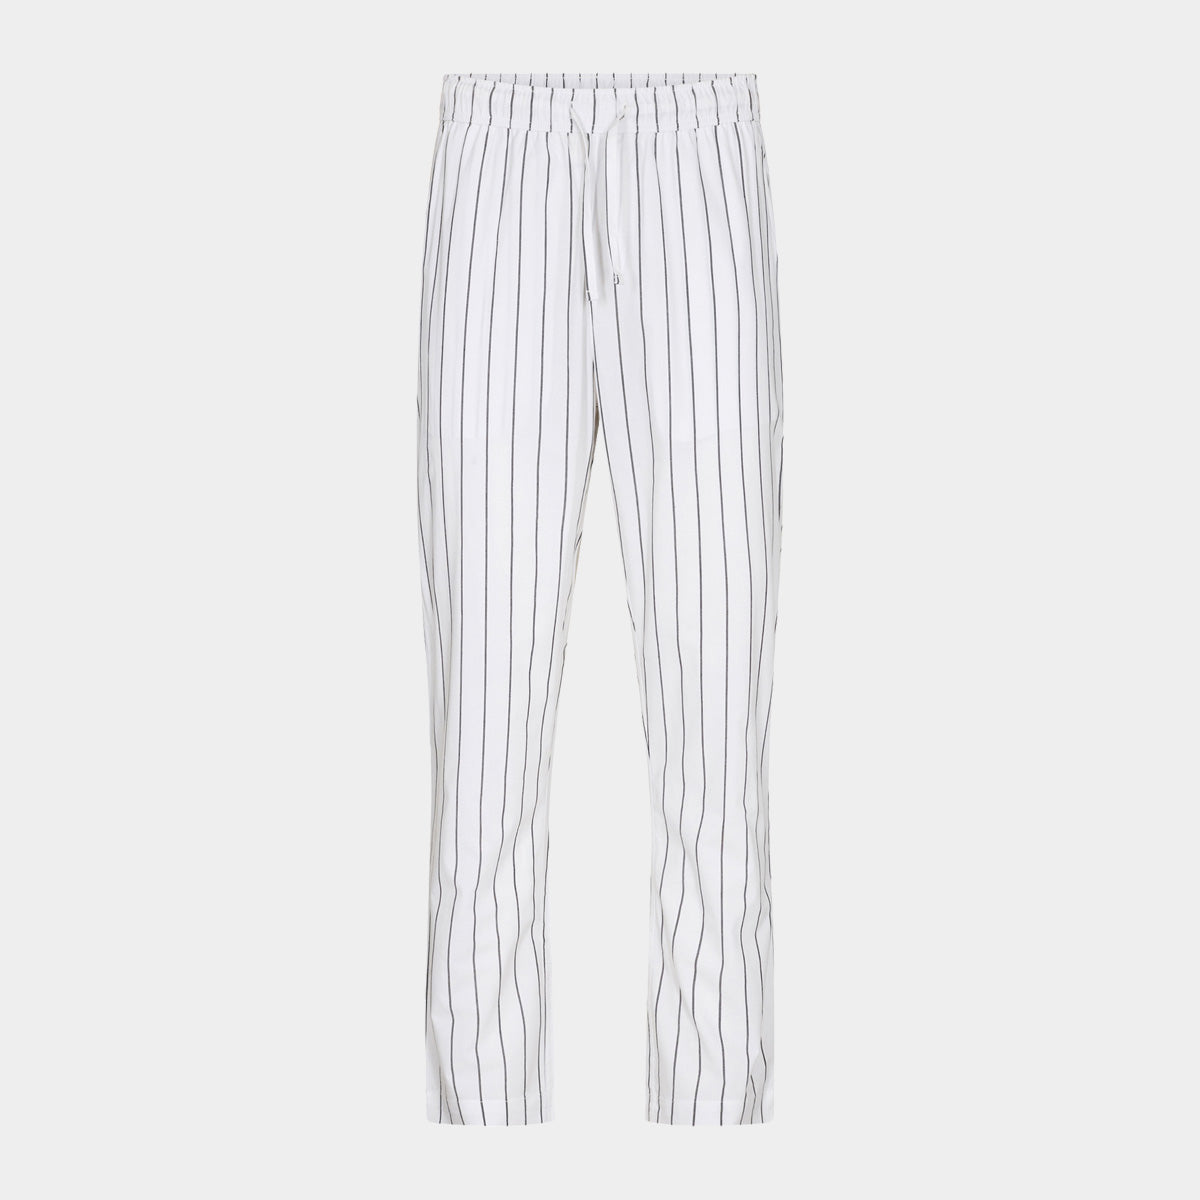 Billede af Hvide bambus pyjamasbukser med smalle grå striber fra JBS of Denmark, XS hos Bambustøj.dk